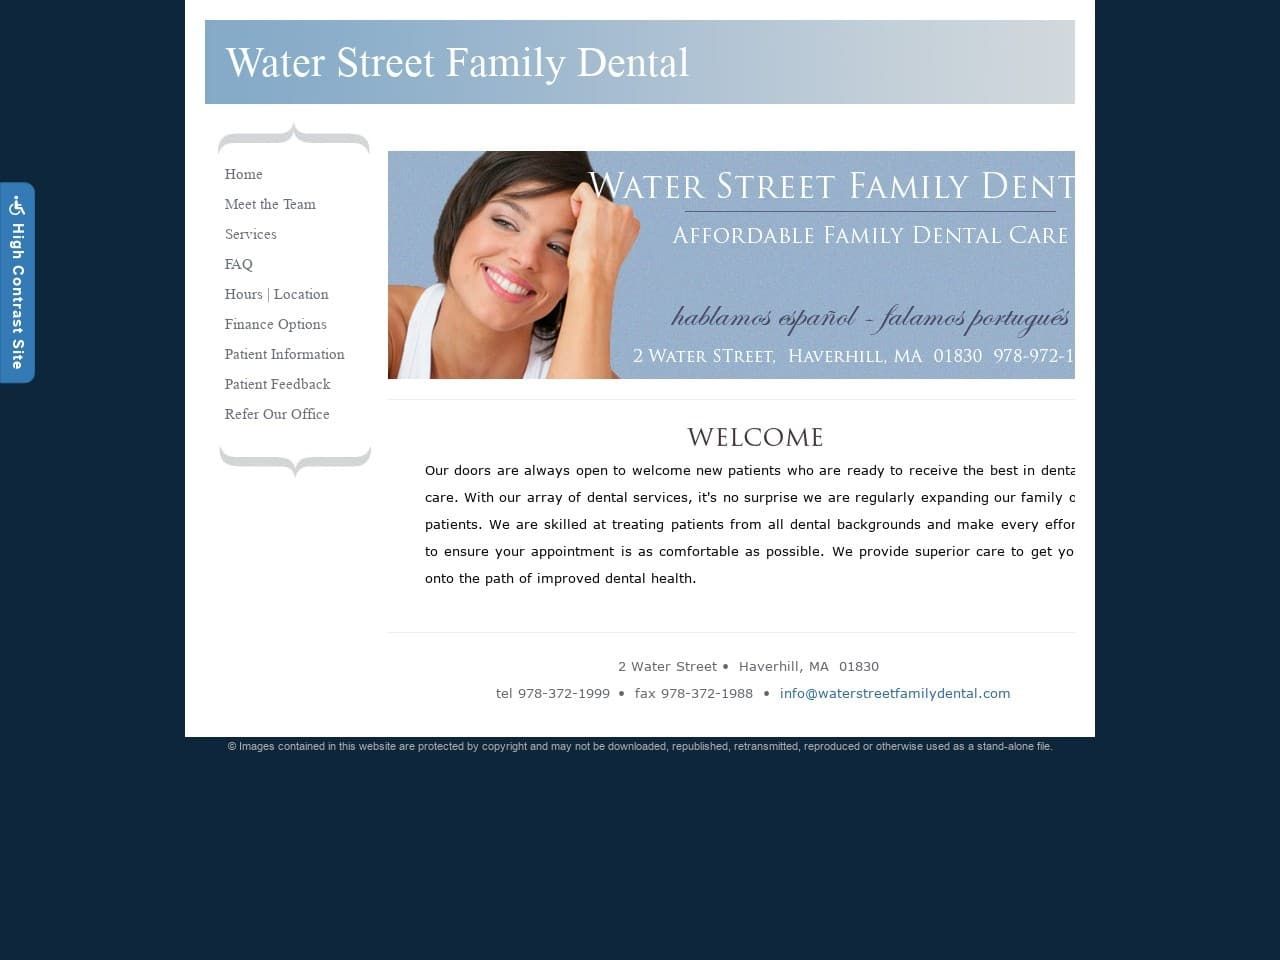 Water Street Family Dental Website Screenshot from waterstreetfamilydental.com